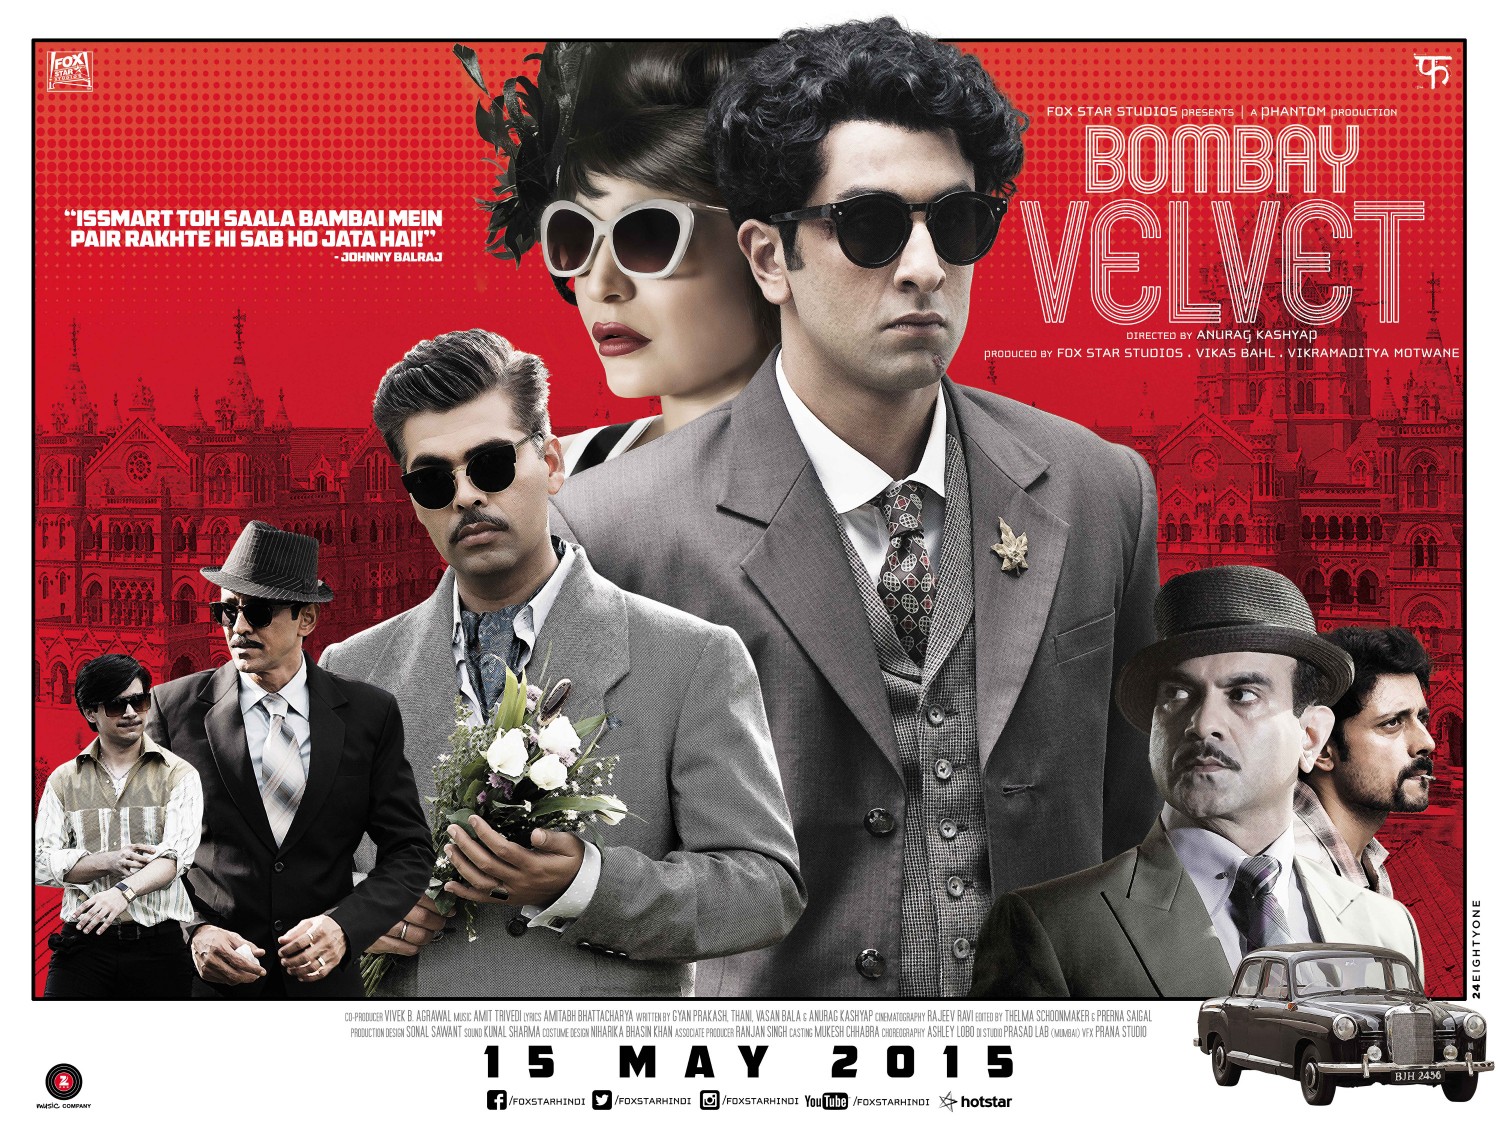 Extra Large Movie Poster Image for Bombay Velvet (#4 of 8)